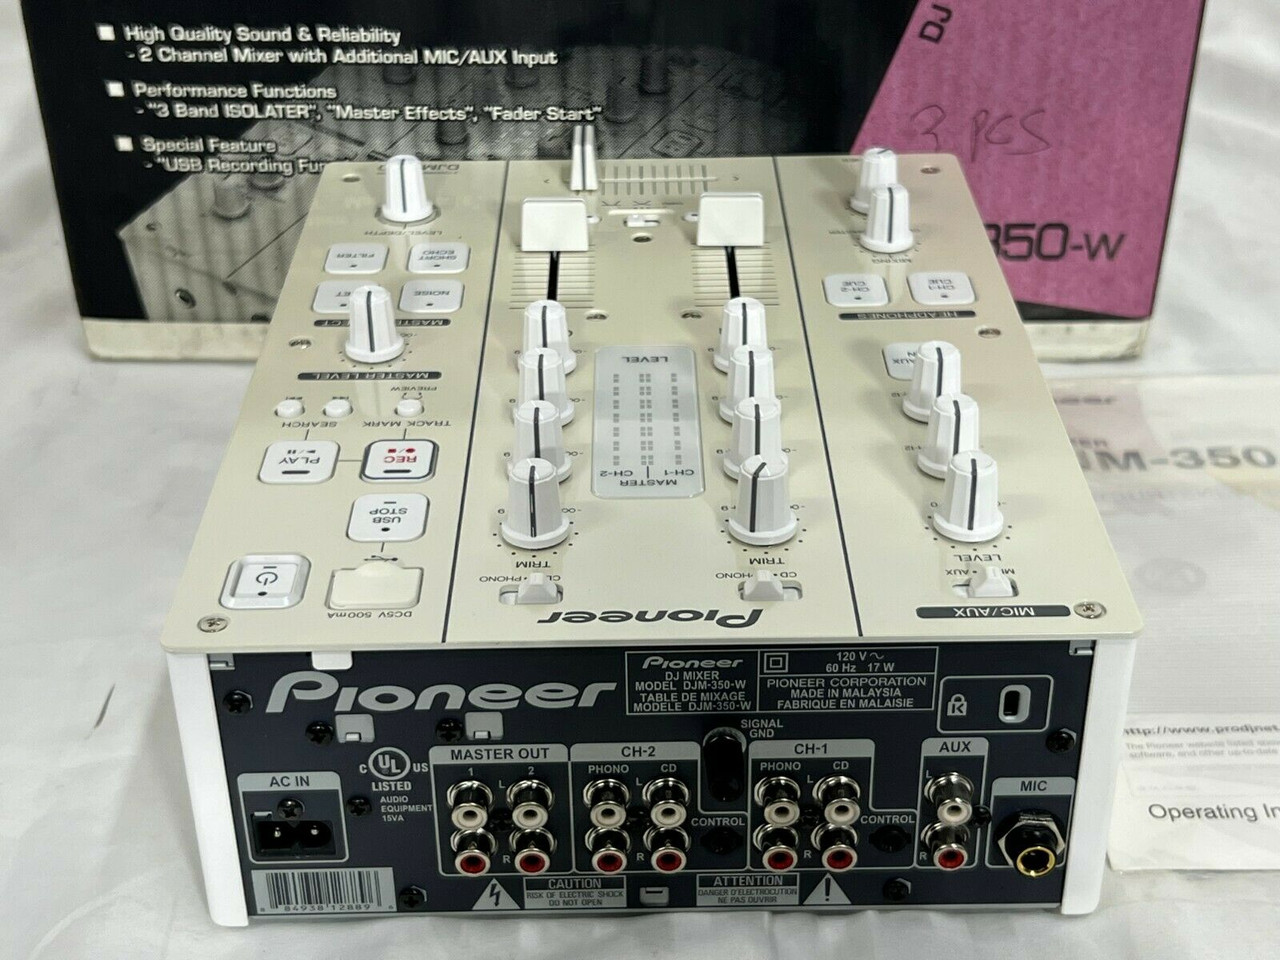 Heart　Sound　DJM-350-W　(One)　Effects　-2704　Mixer　True　Pioneer　2CH